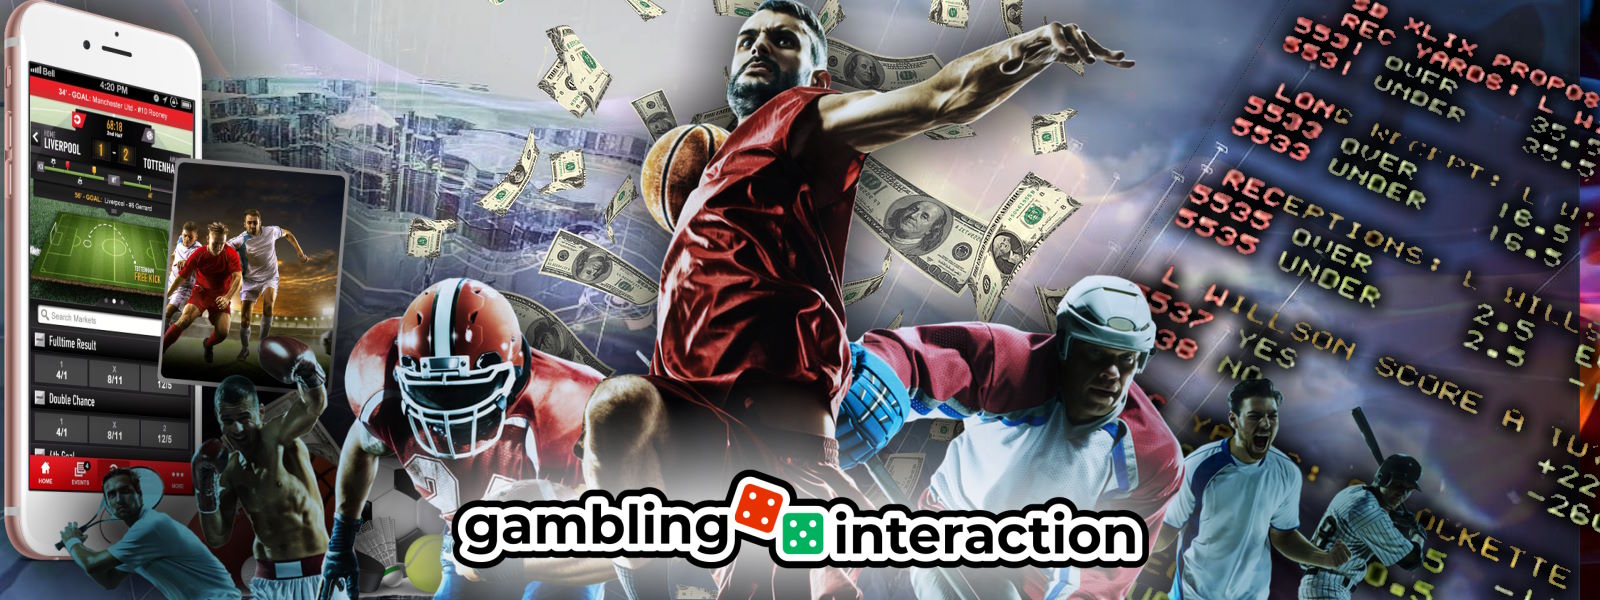 Online Sports Betting